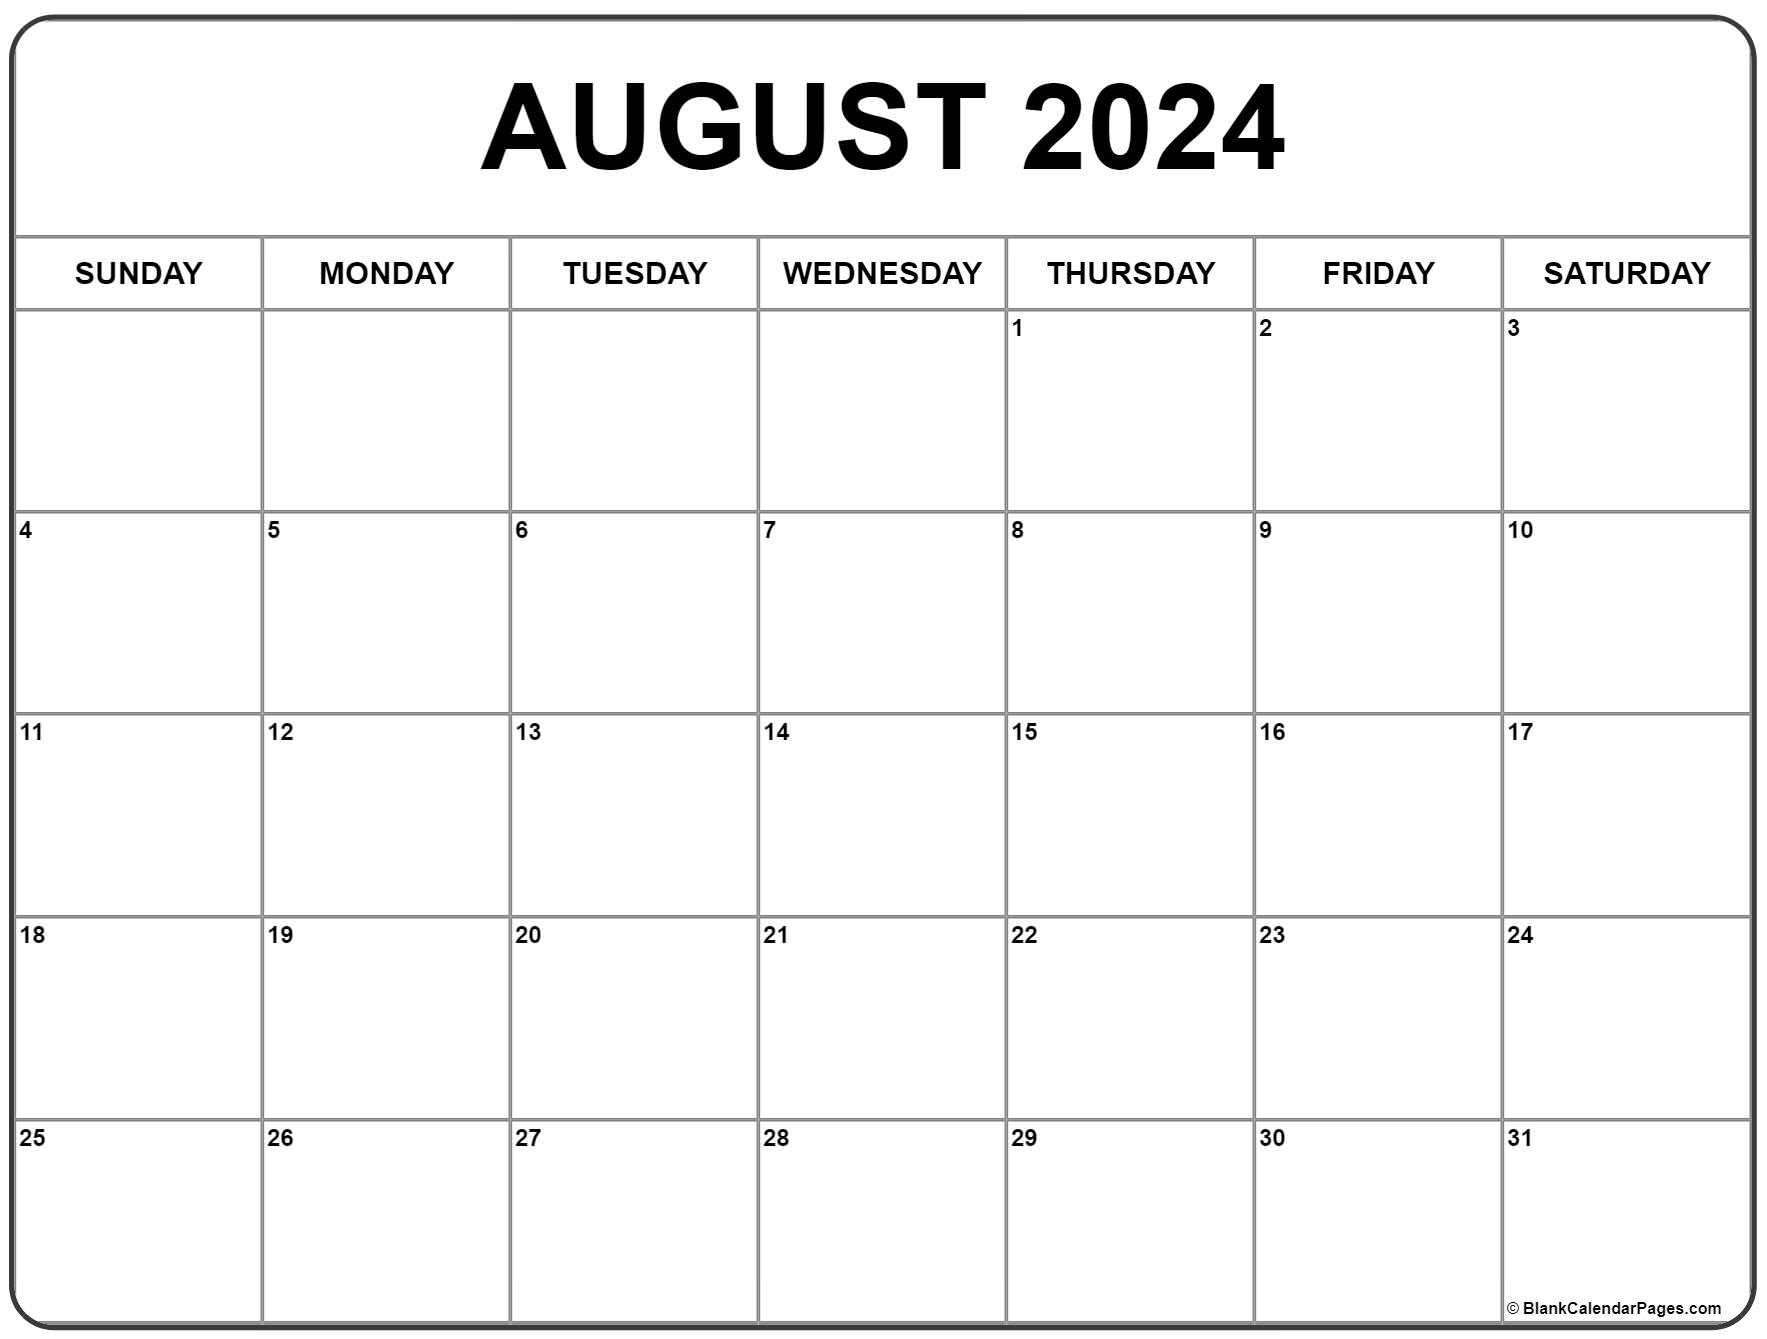 August 2024 Calendar | Free Printable Calendar for Free Printable August 2024 Calendar